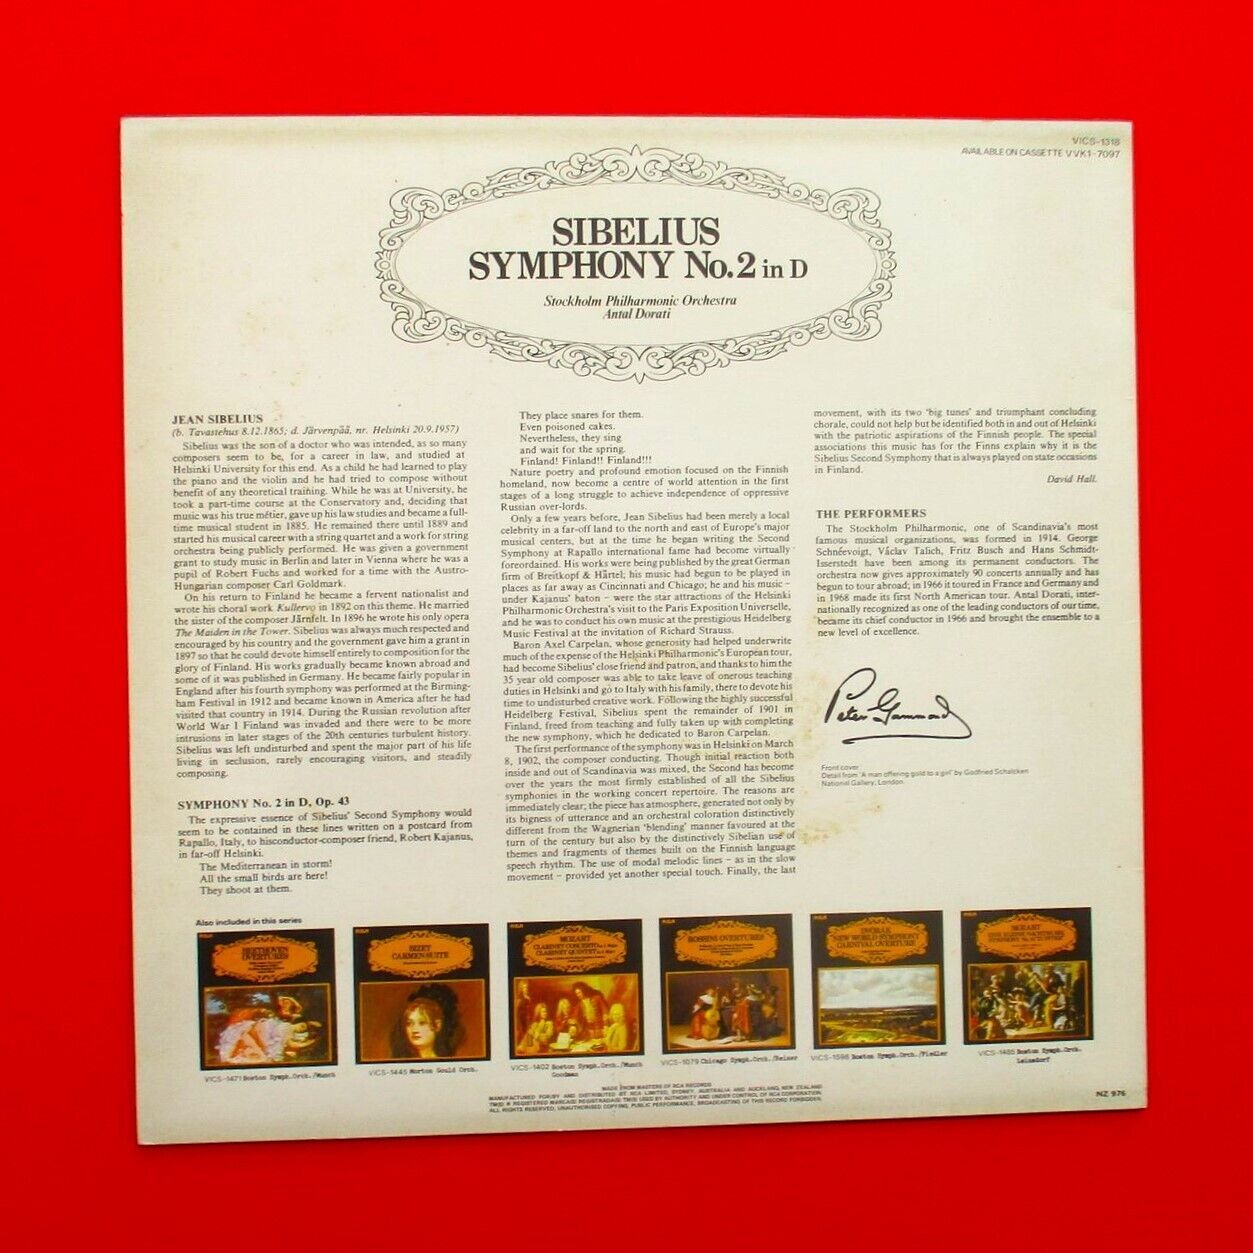 Sibelius Antal Dorati Symphony No. 2 in D Vinyl Album LP 1969 Australian Press